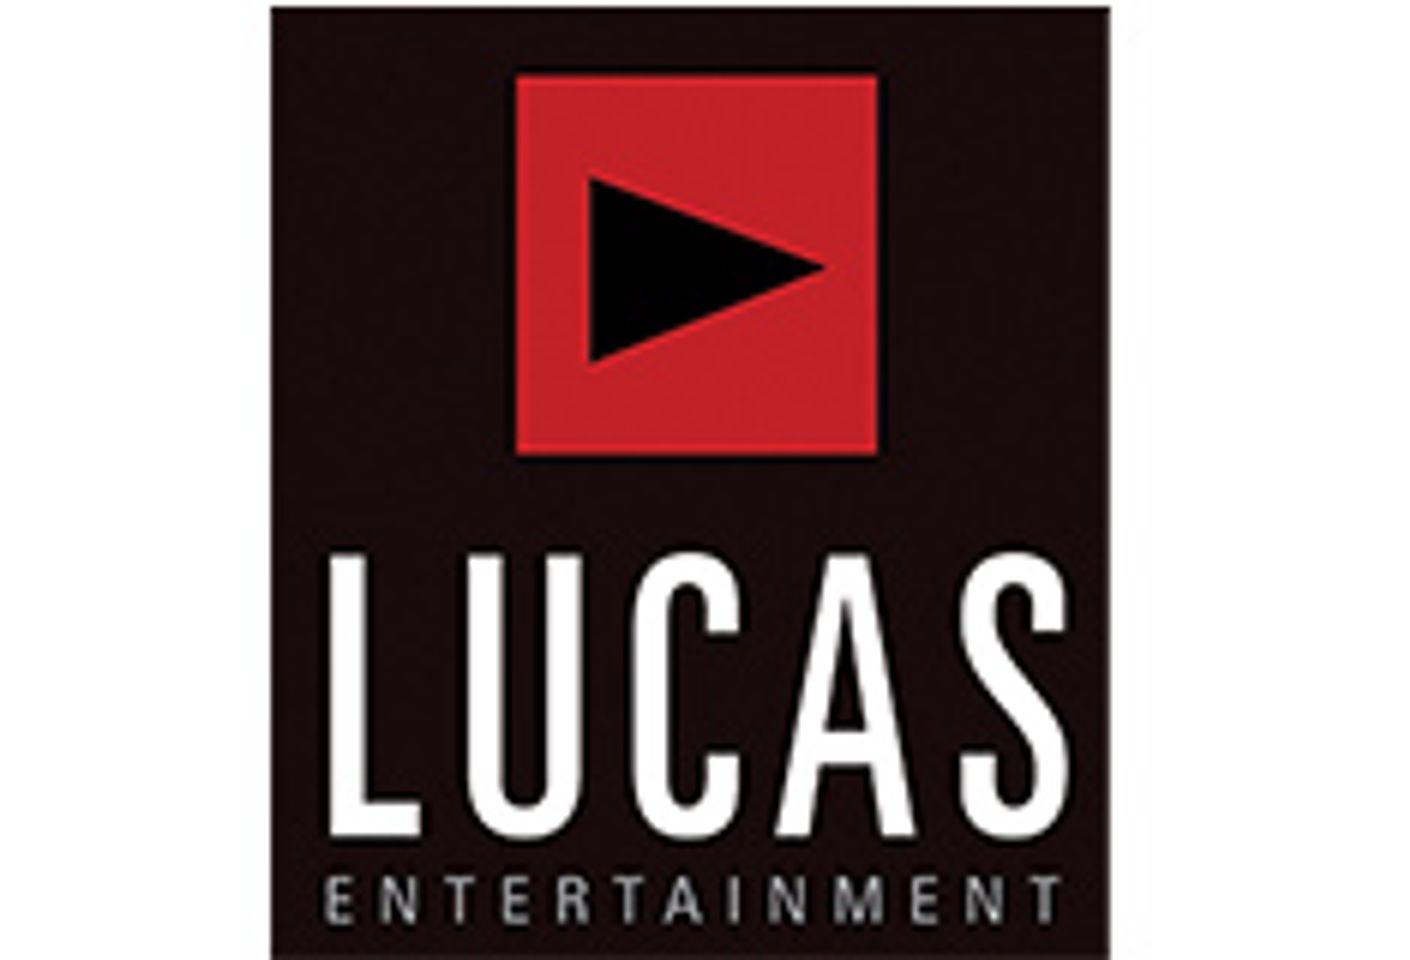 Lucas Entertainment Signs Jalifstudio to Exclusive Distro Deal